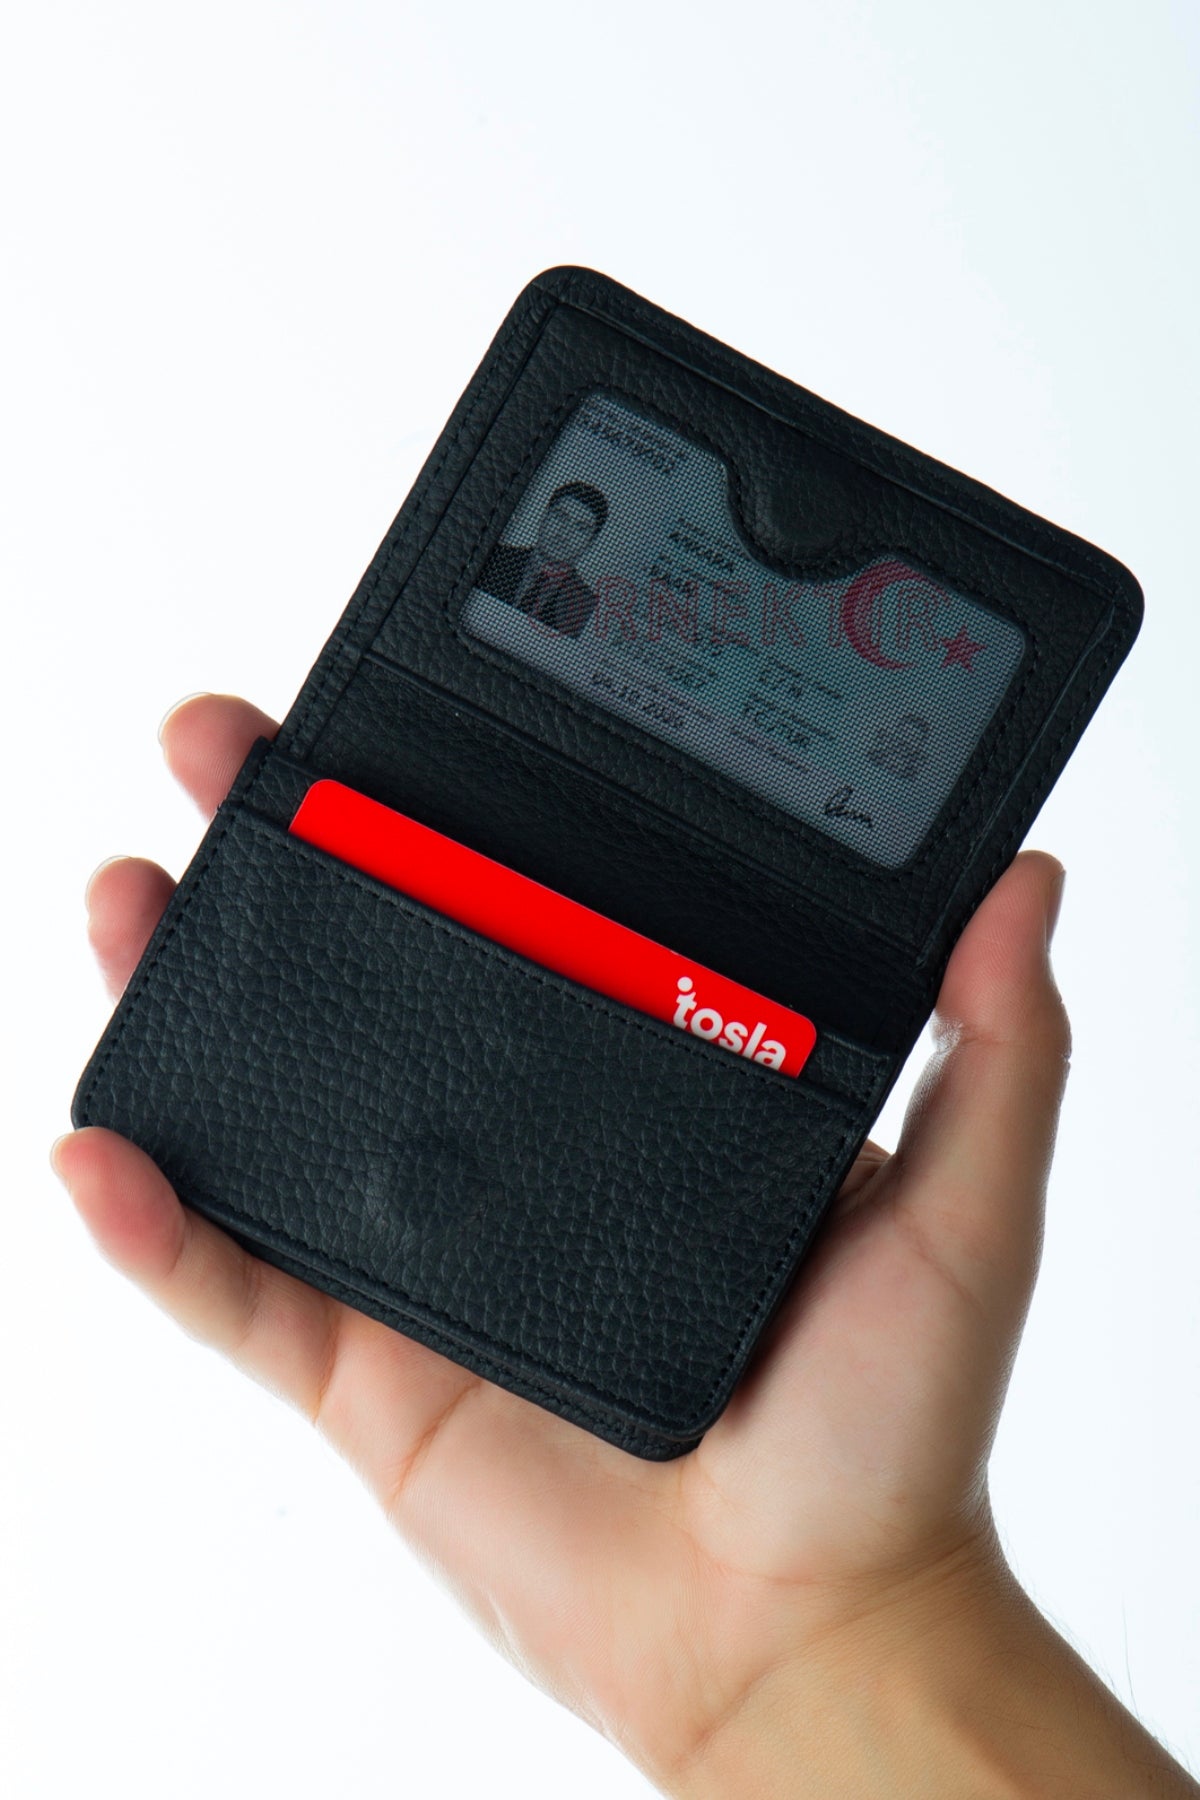 Nerina Crazy Leather Unisex Card Holder Wallet